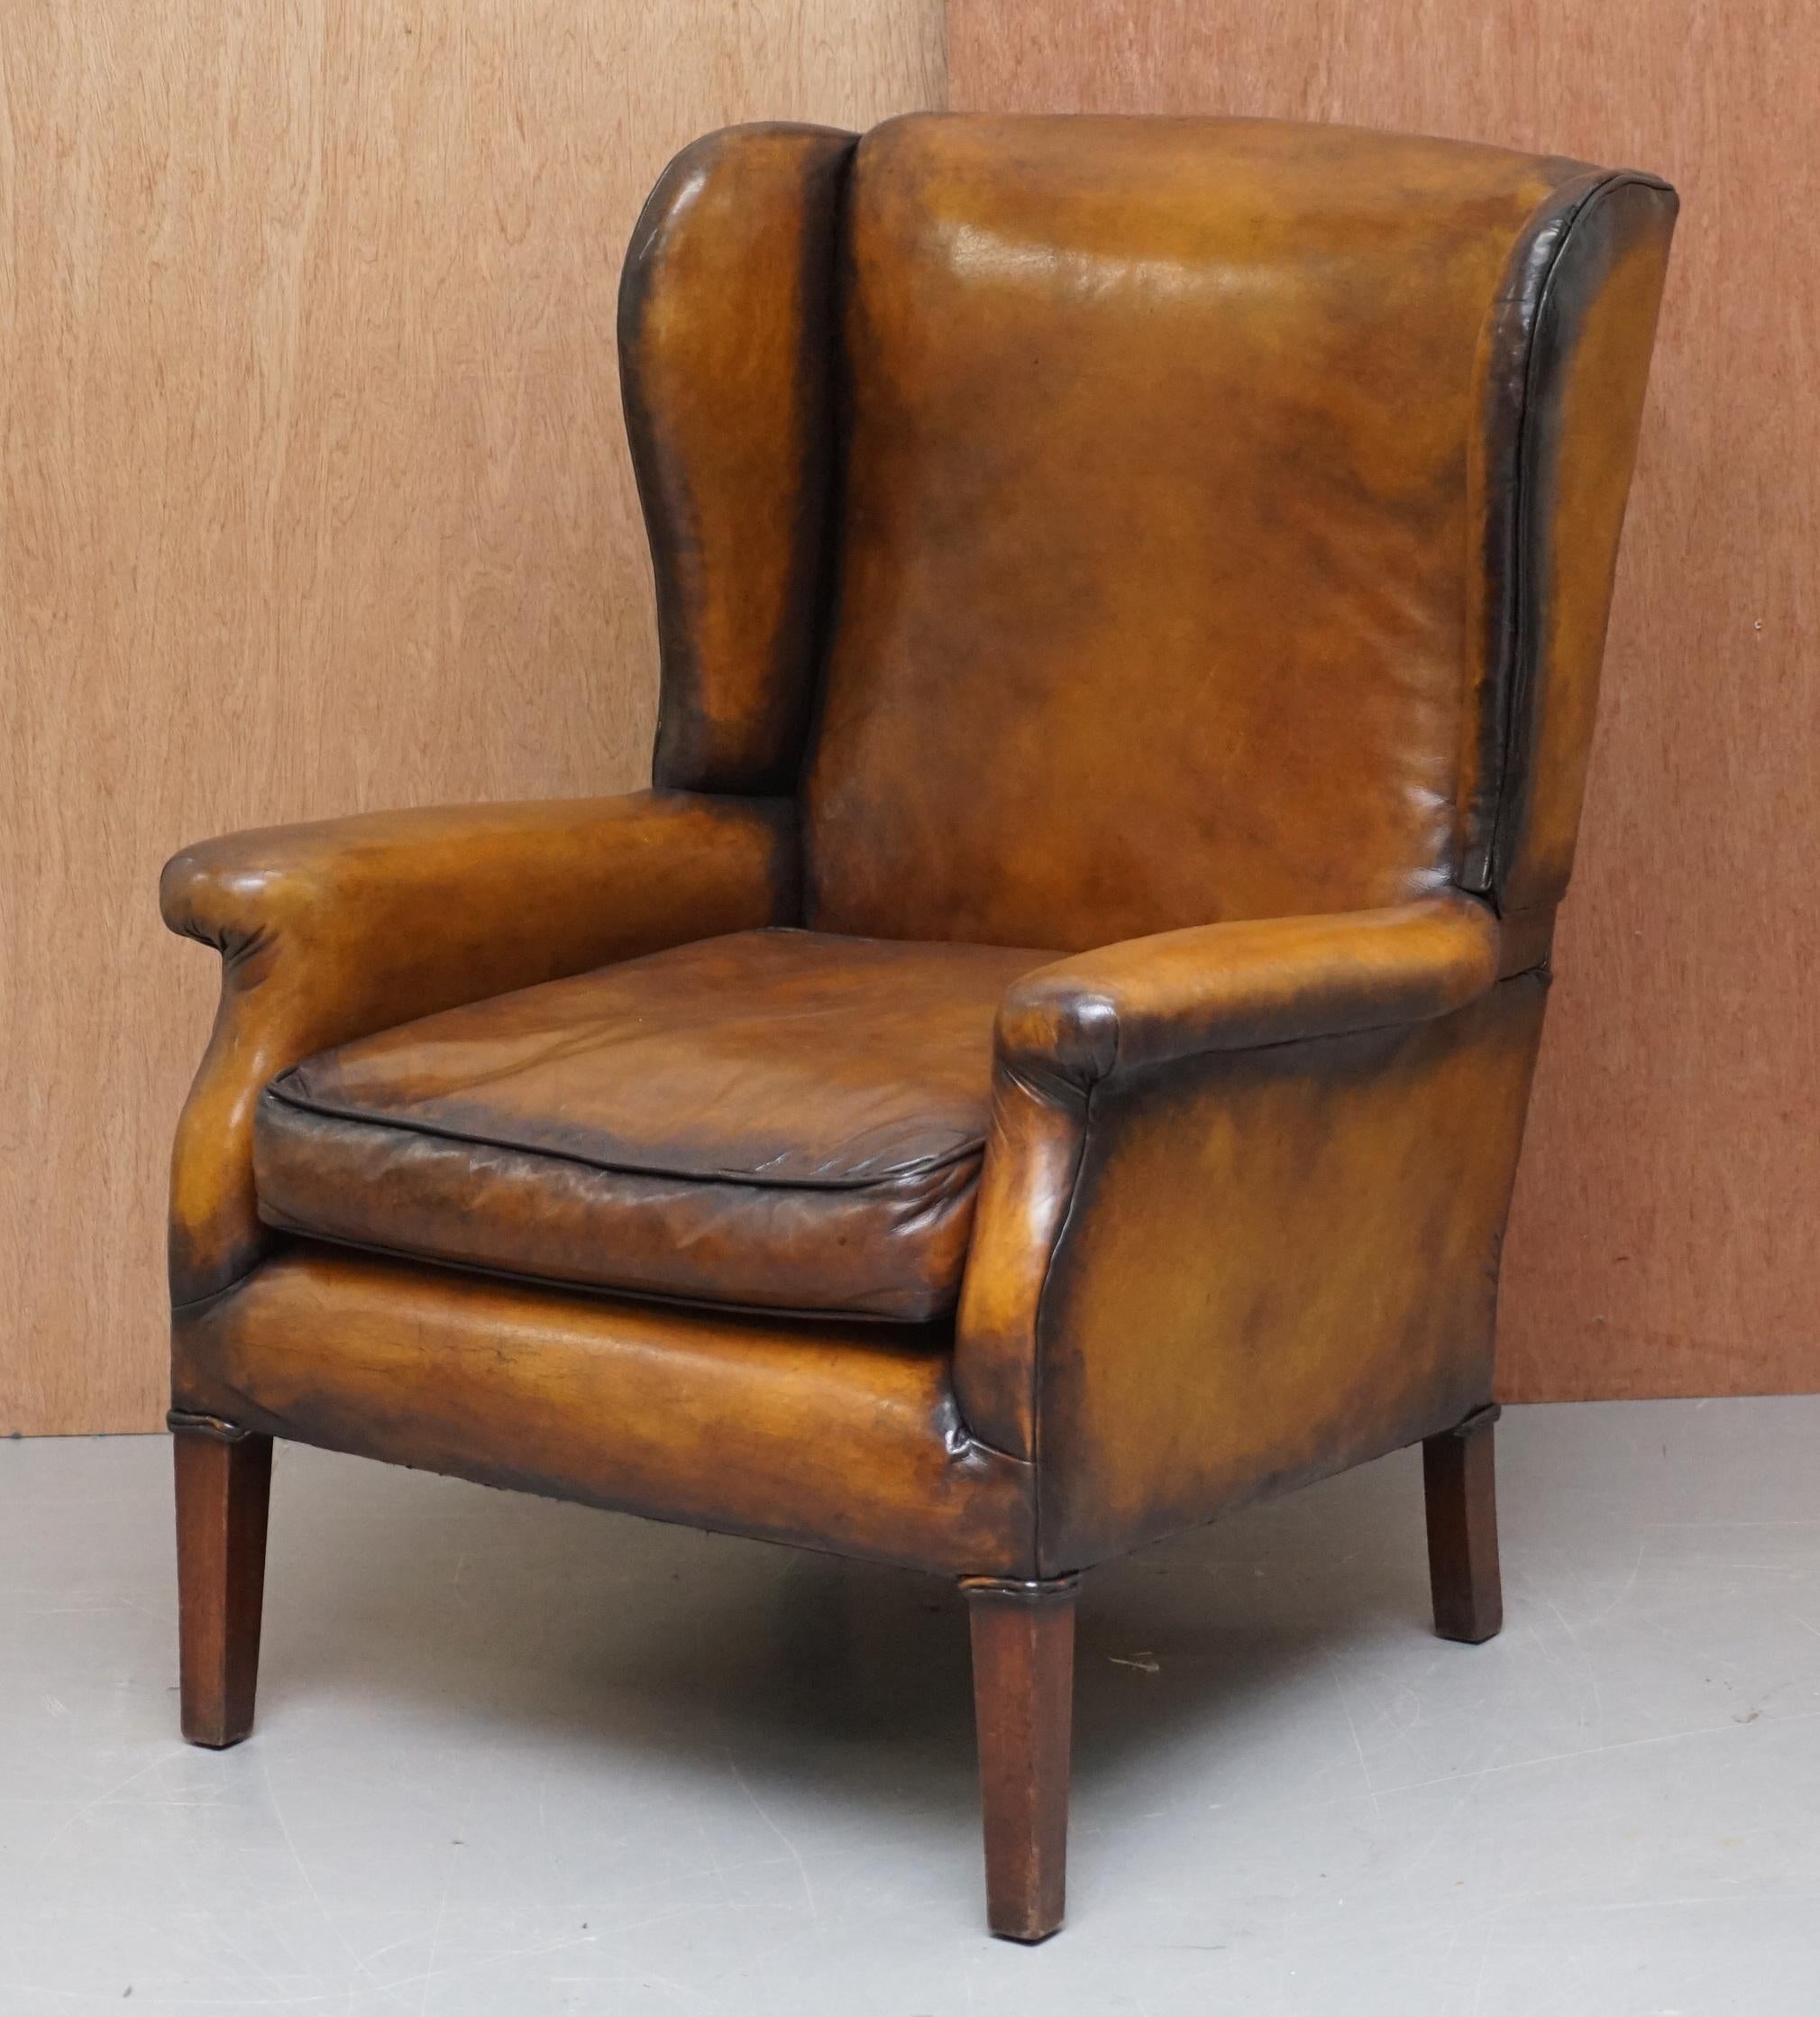 English Elegant Fully Restored Edwardian Brown Leather Club Wingback Armchair circa 1900